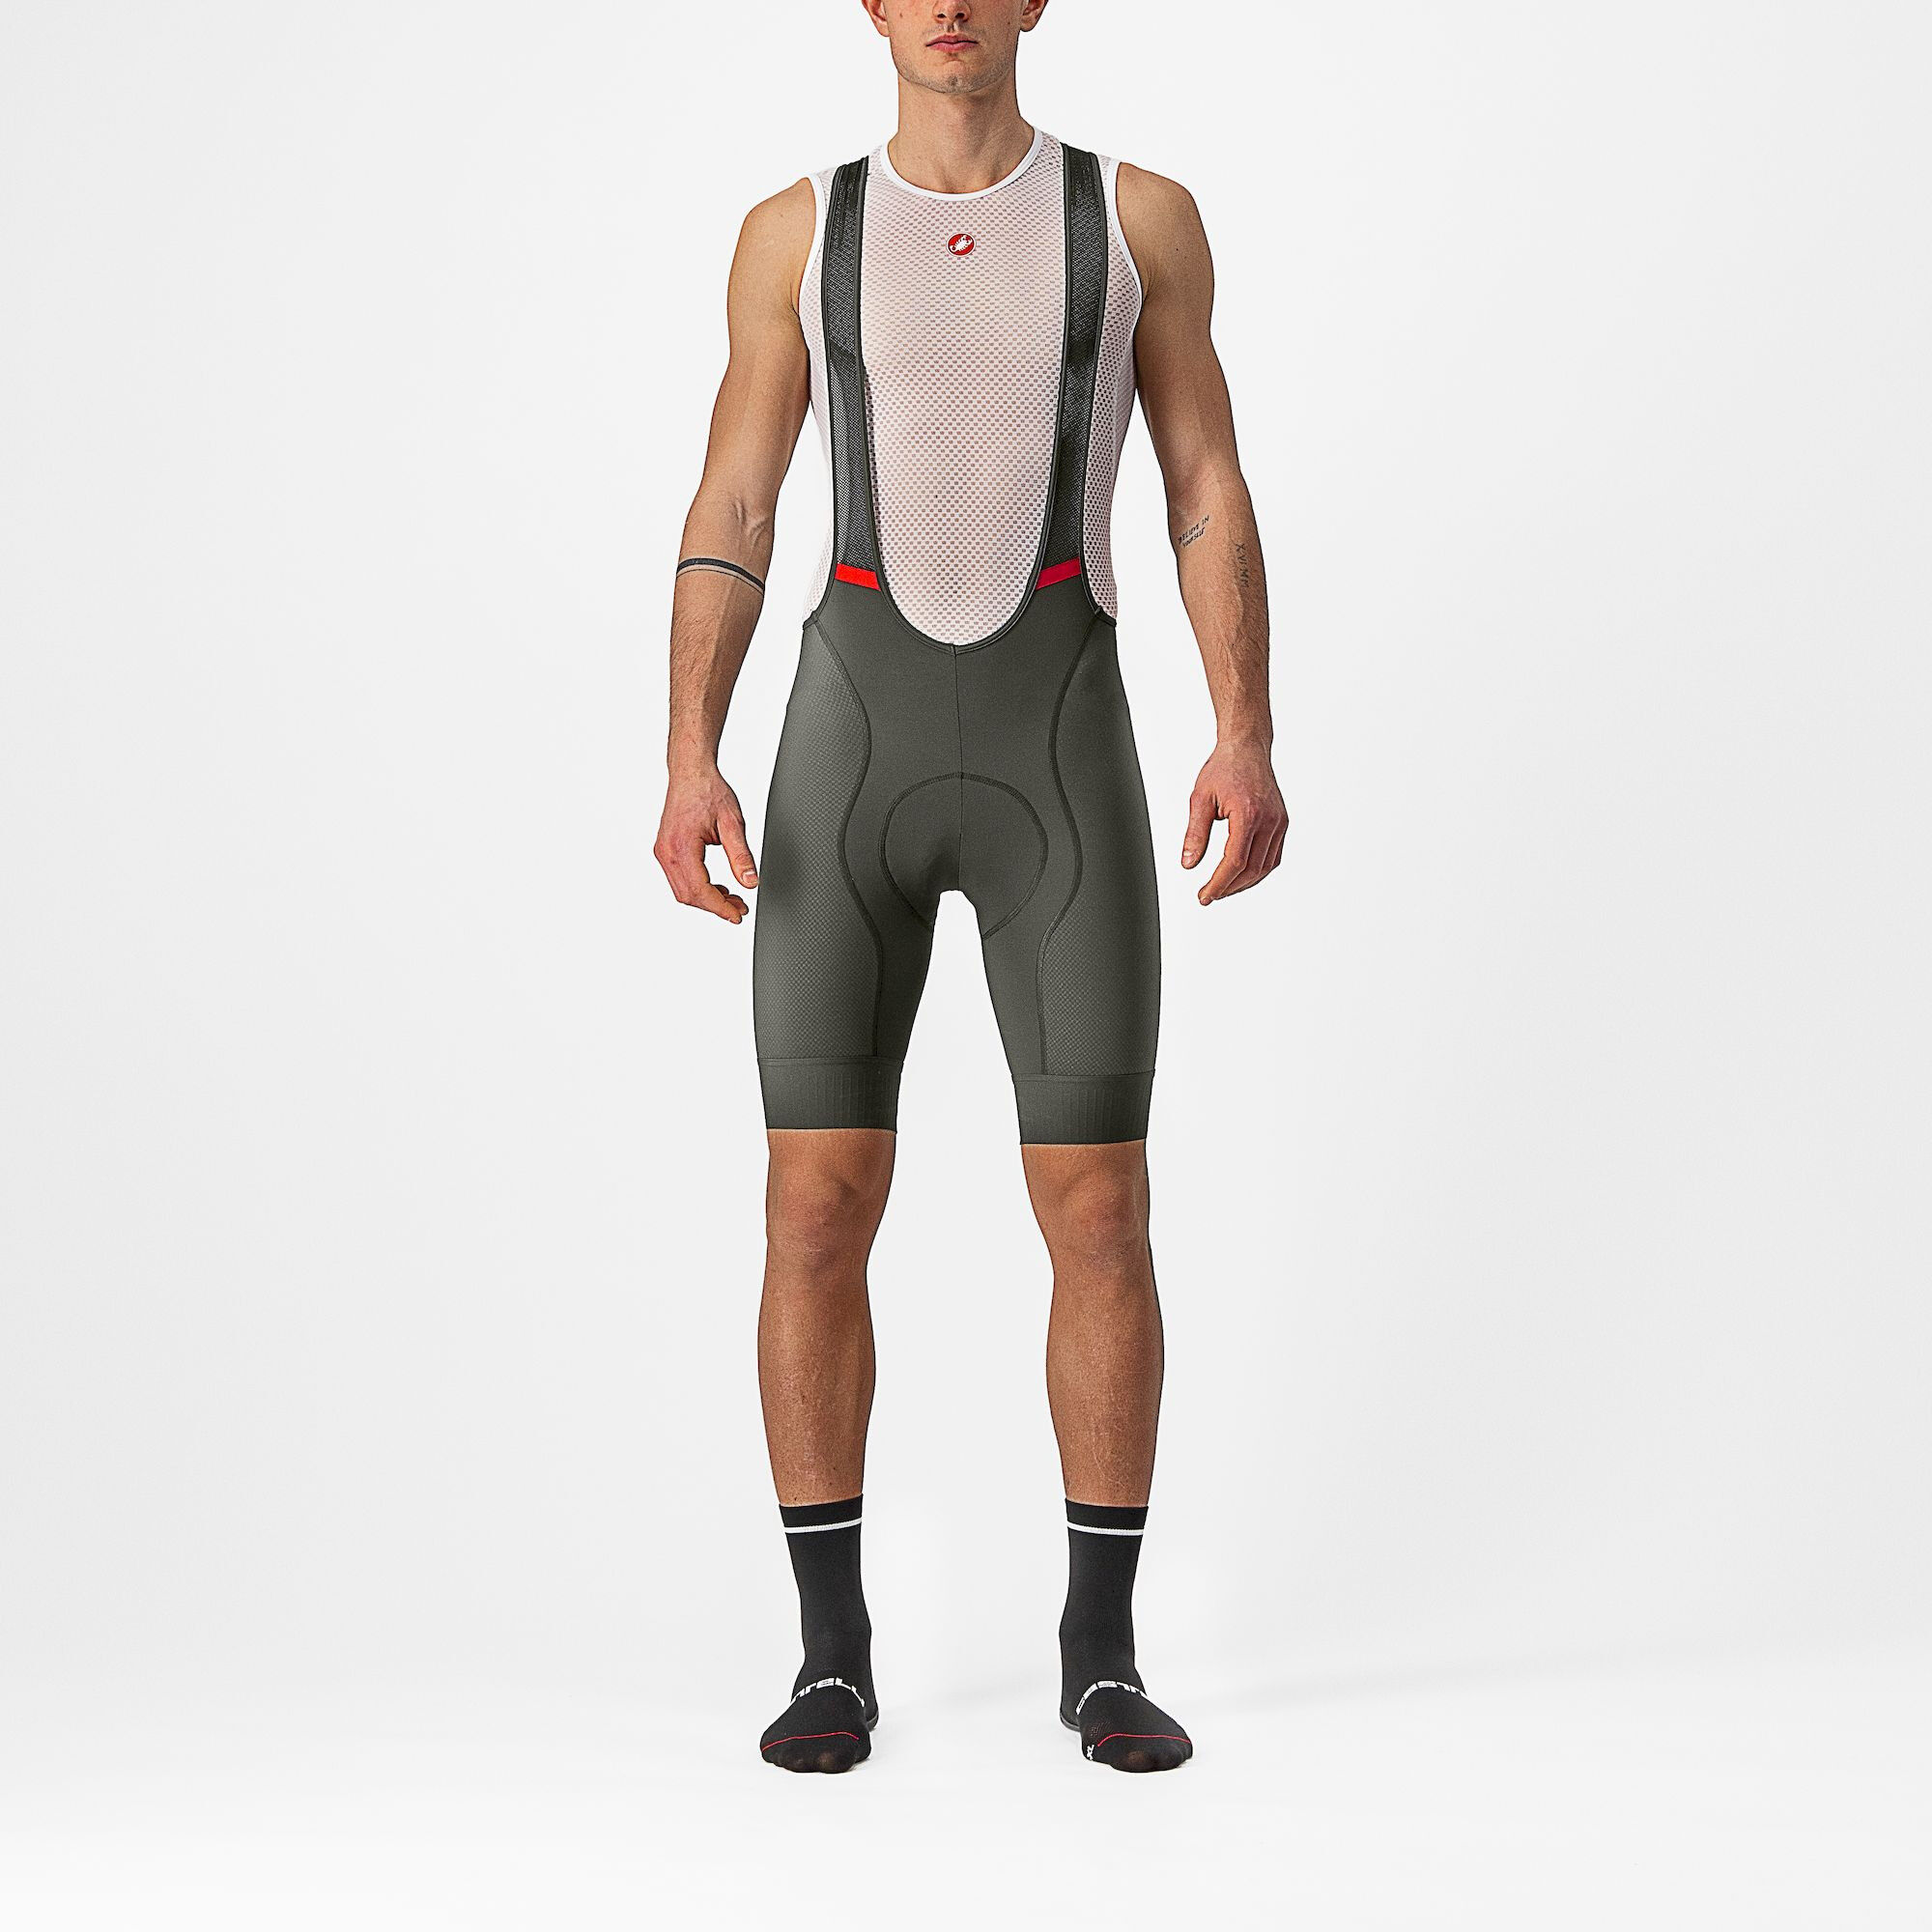 Castelli Competizione - Cycling shorts - Men's